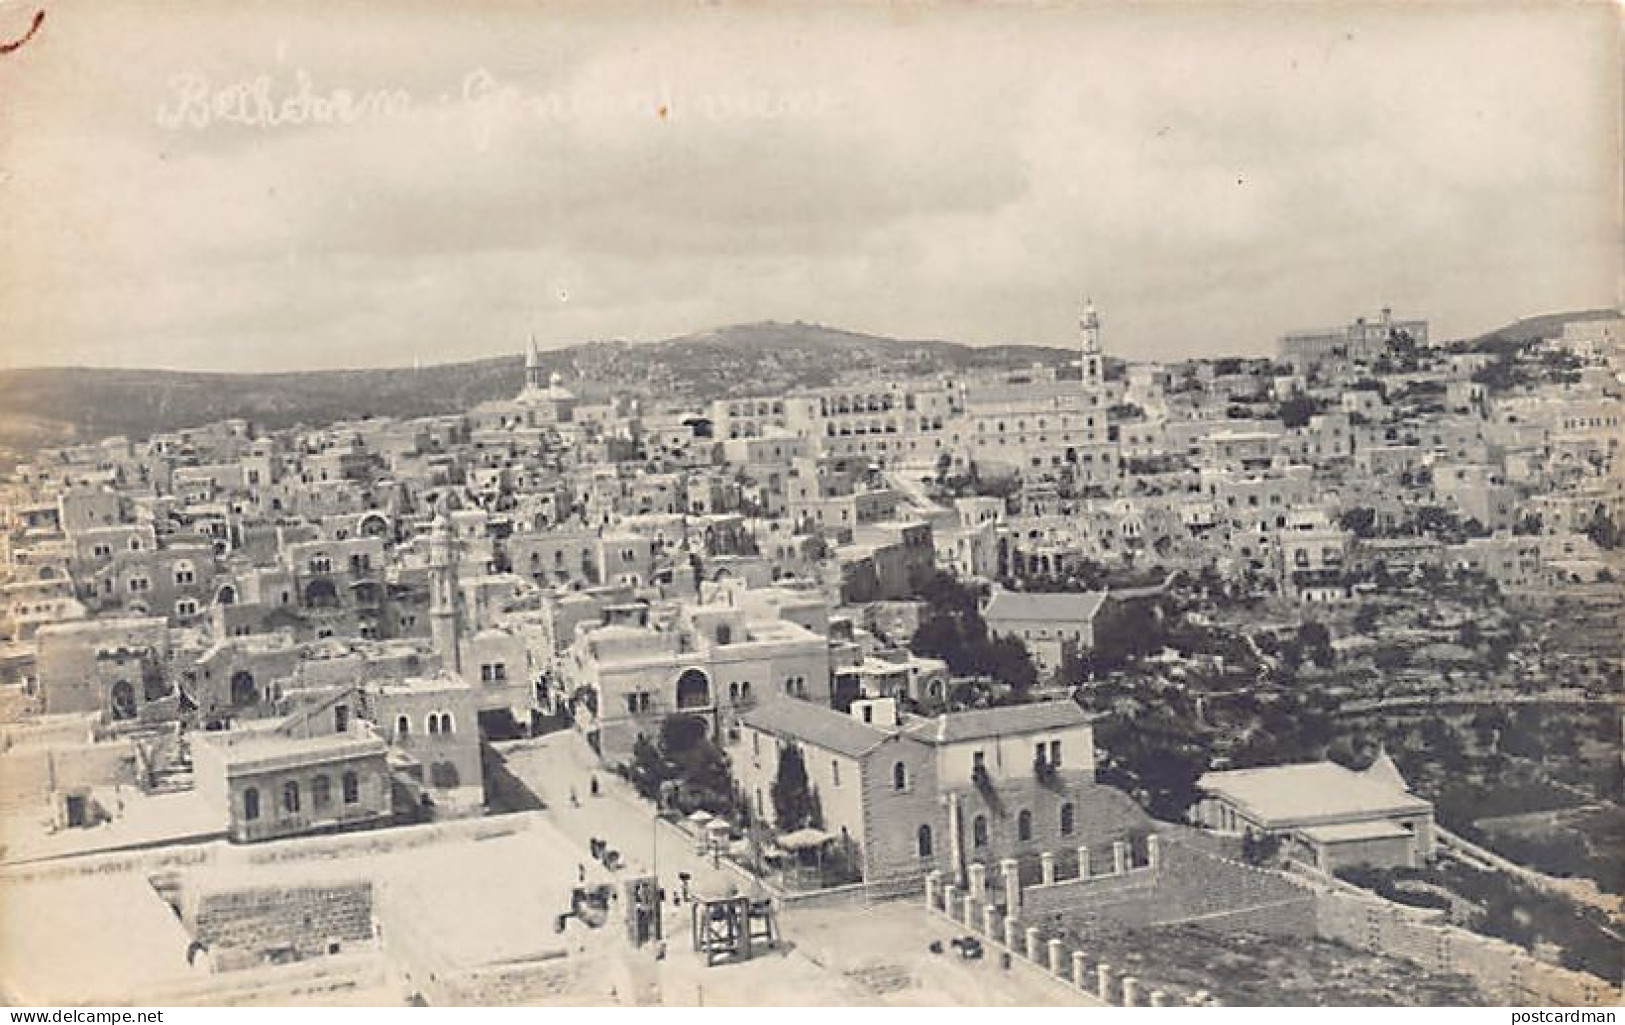 Palestine - BETHLEHEM - General View - REAL PHOTO - Publ. Unknwon  - Palestine